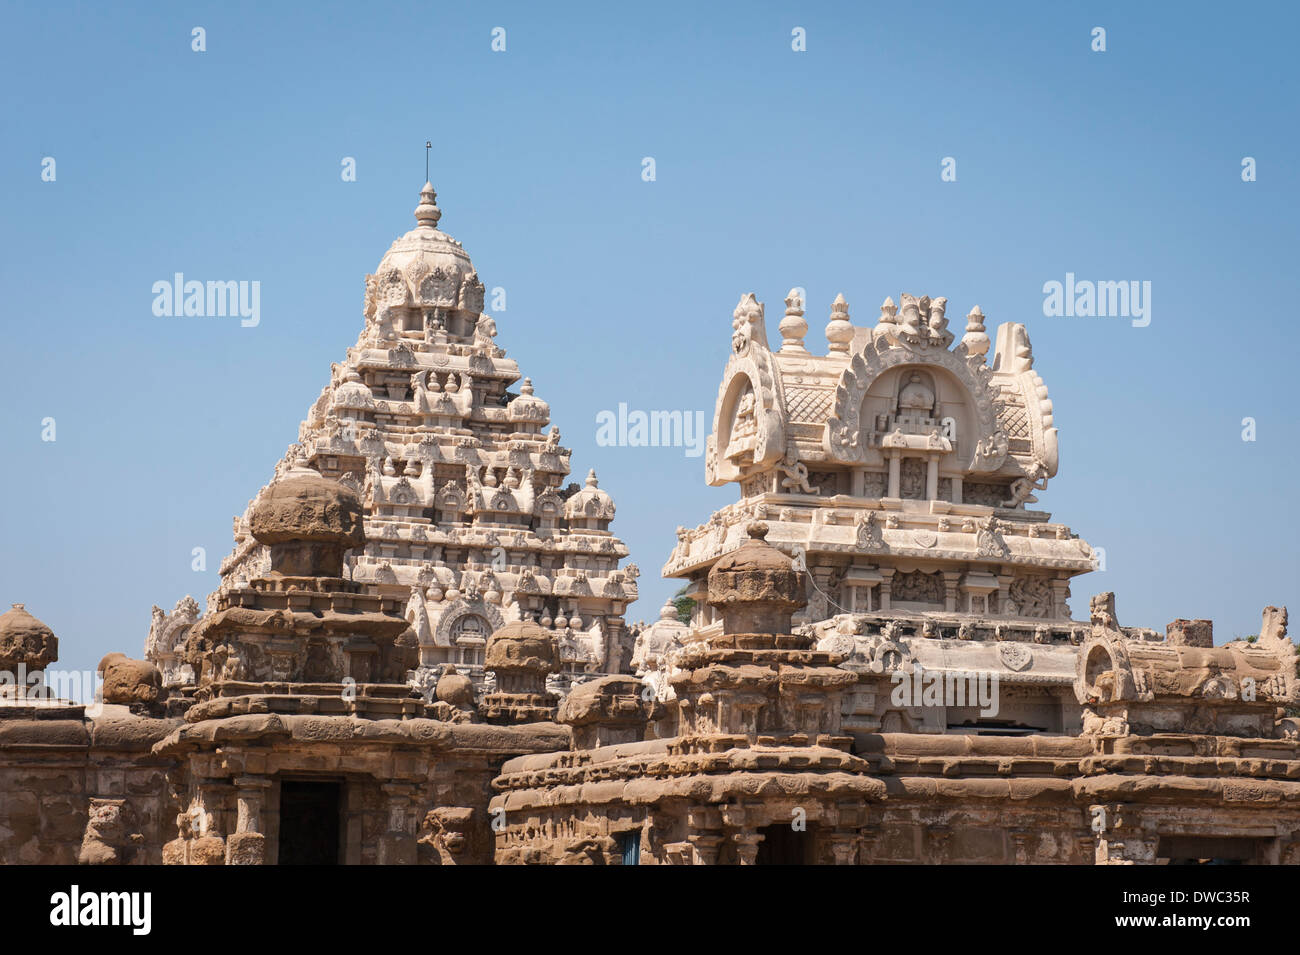 Südindien Tamil Nadu Kanchipuram 6. Jahrhundert Kanchi Sri Kailasanthar Hindu Shiva Tempel Turm Türme Shikara Bas Relief geschnitzte Figuren Statuen Stockfoto